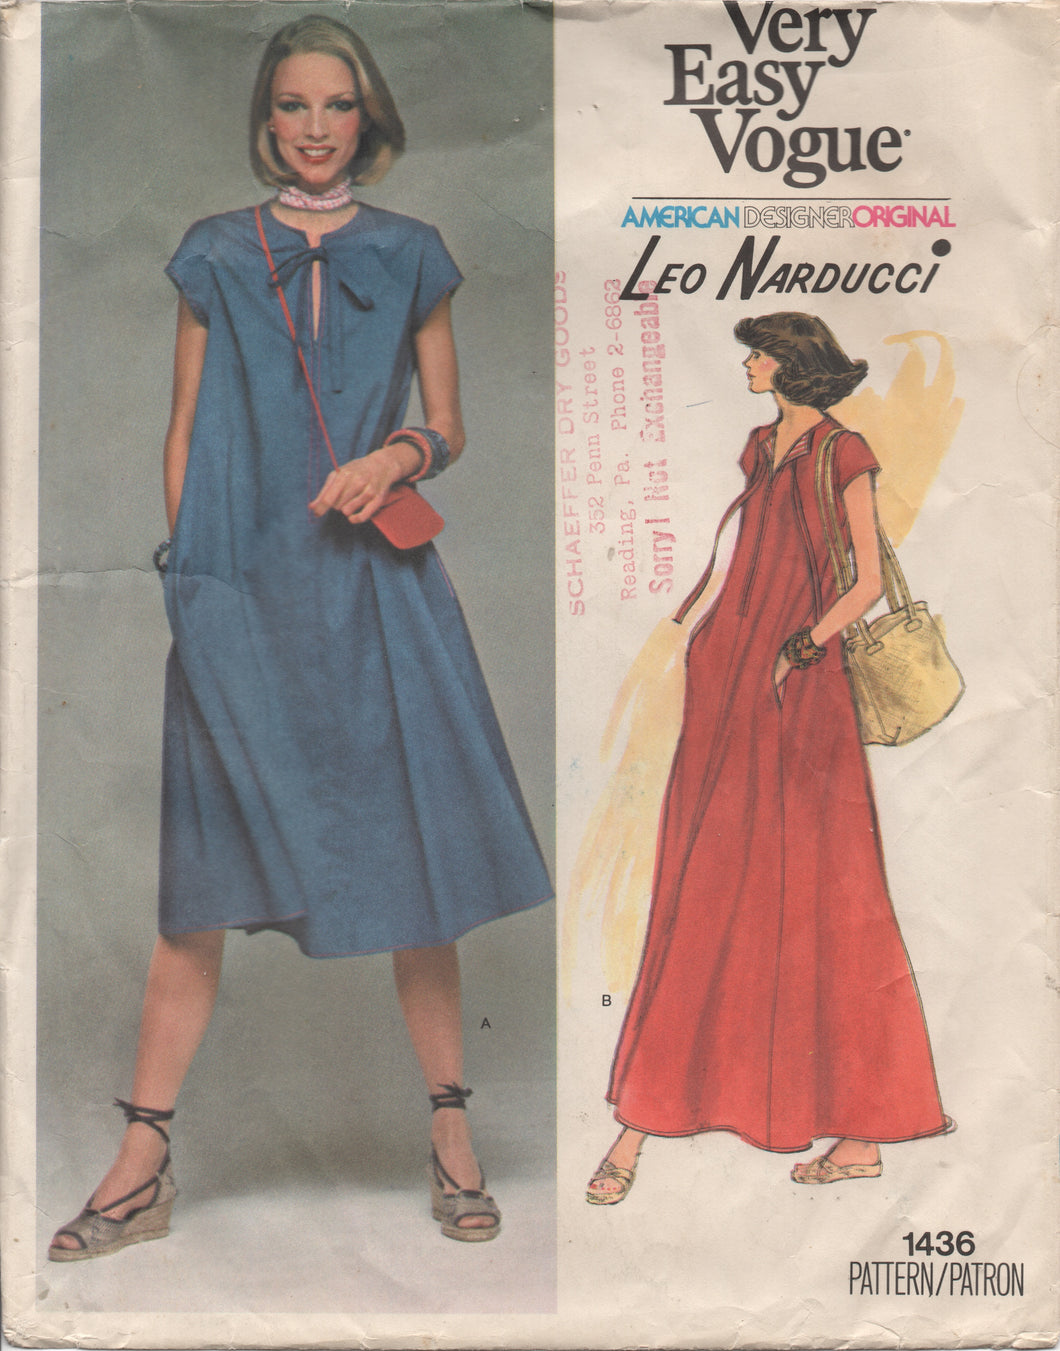 1970's Vogue Paris Original One Piece Dress Midi or Maxi Dress in Two Lengths - Bust 34